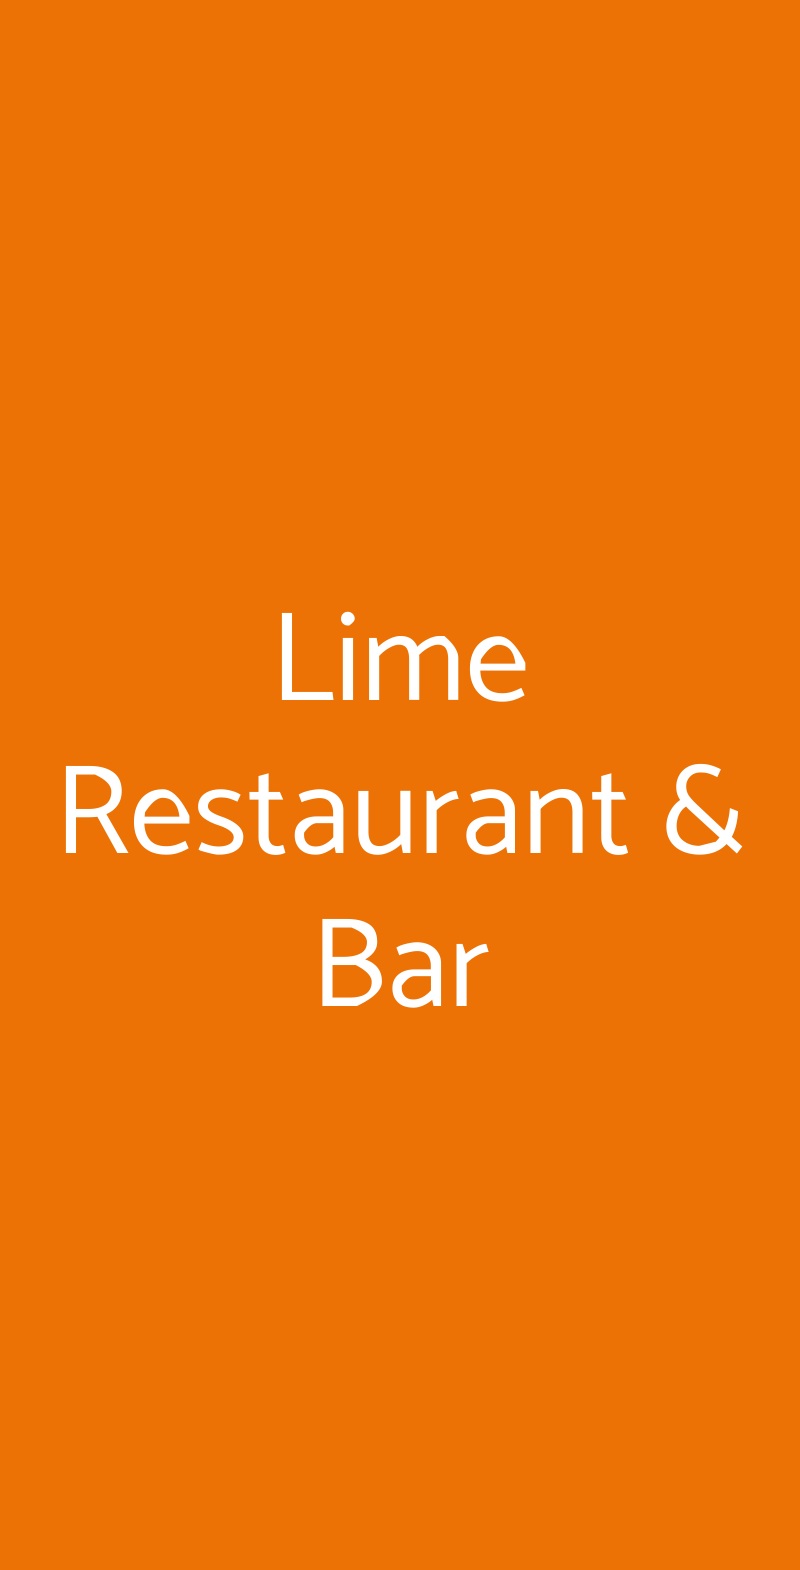 Lime Restaurant & Bar Roma menù 1 pagina